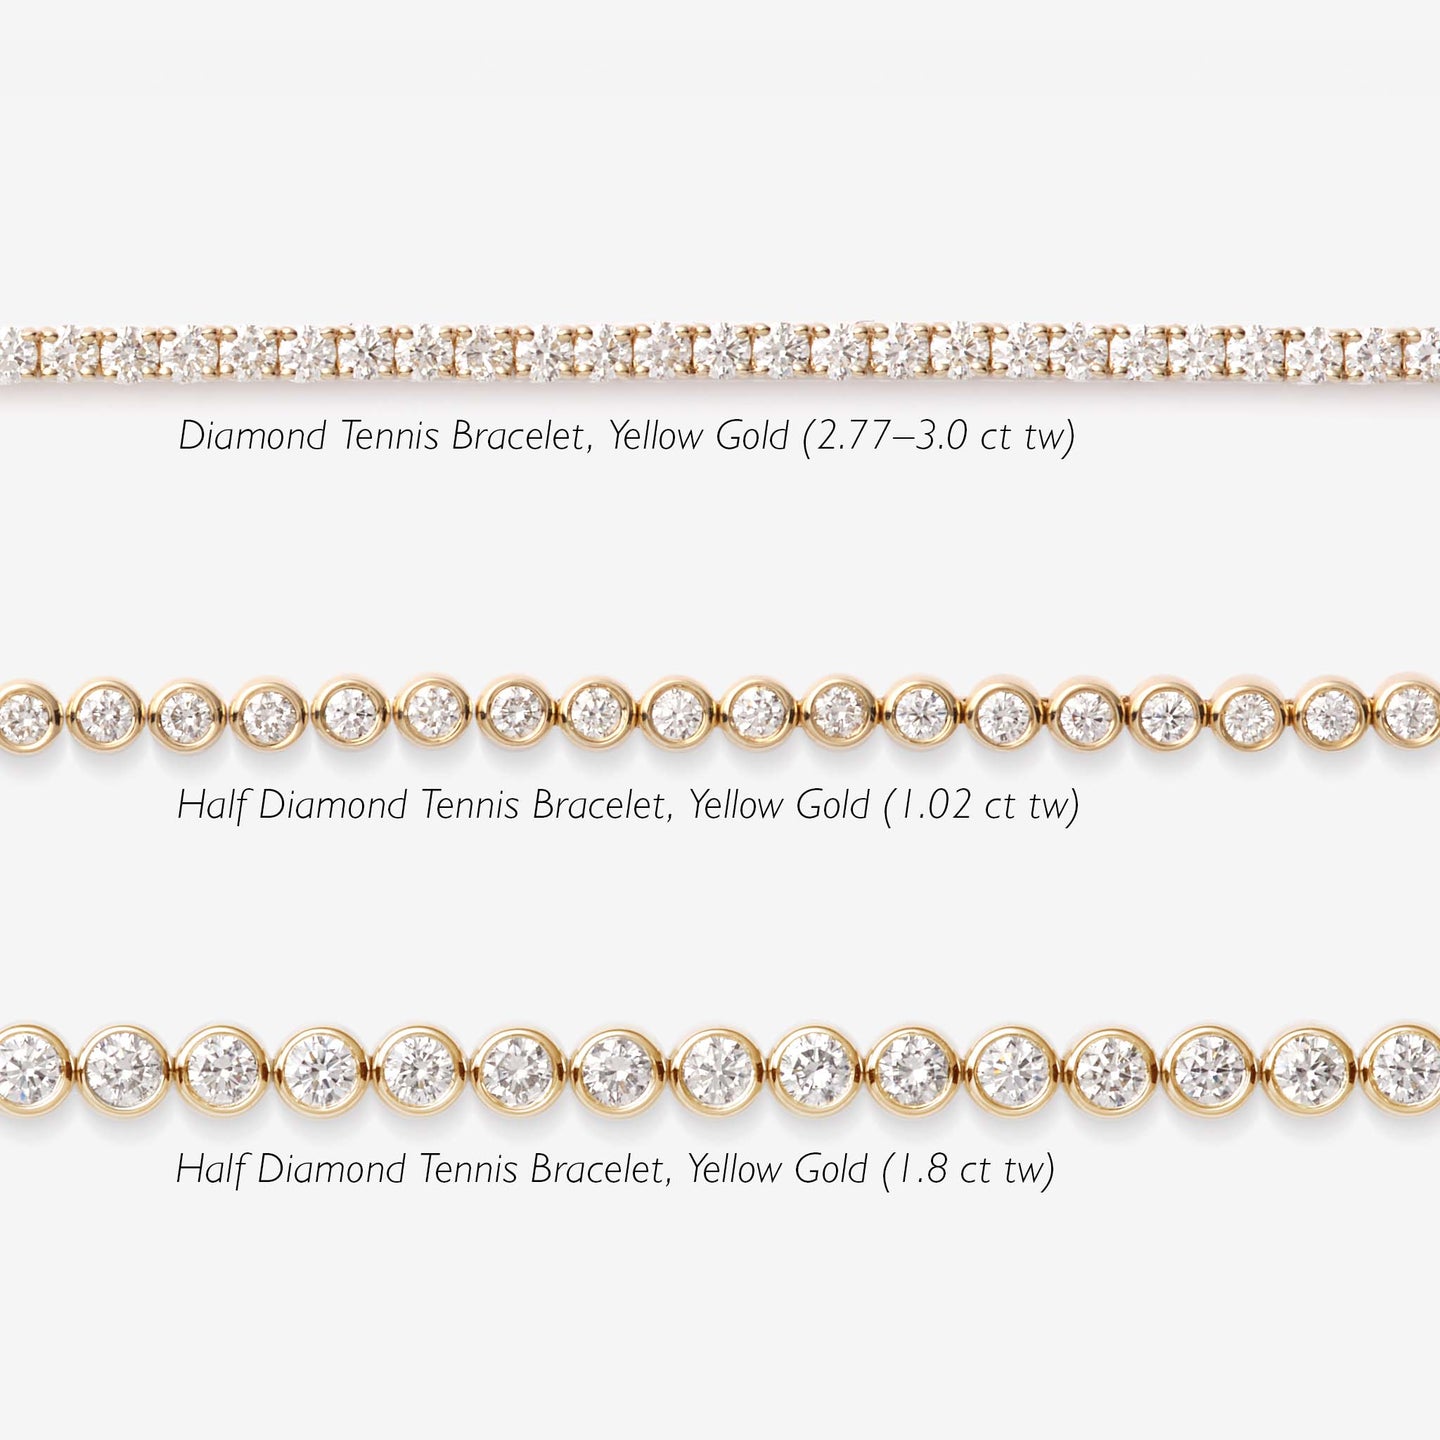 Half Diamond Tennis Bracelet 14k Yellow Gold (1.8 ct tw)